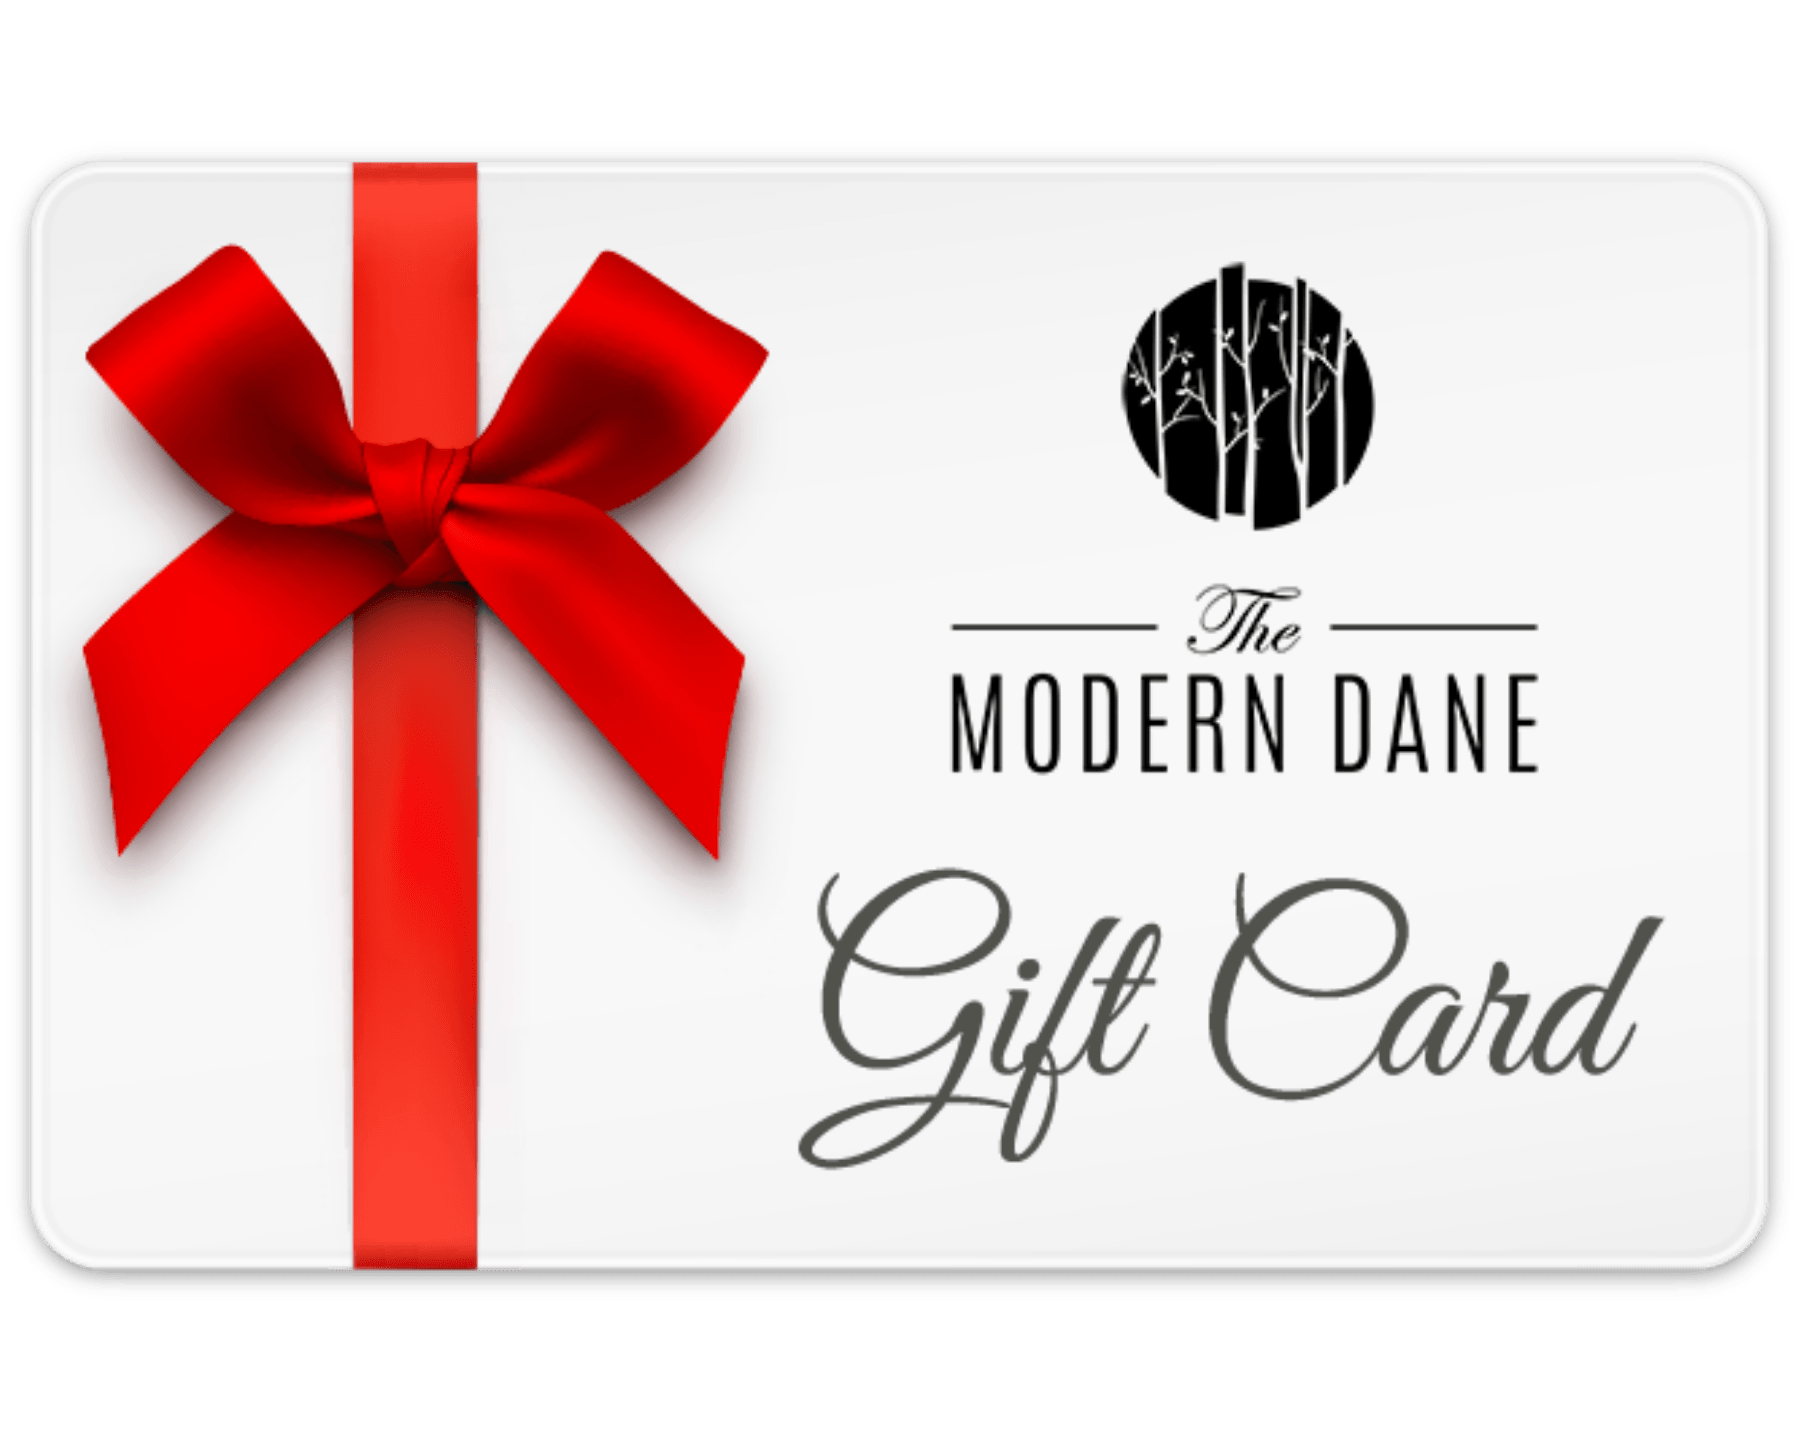 The Modern Dane Gift Card